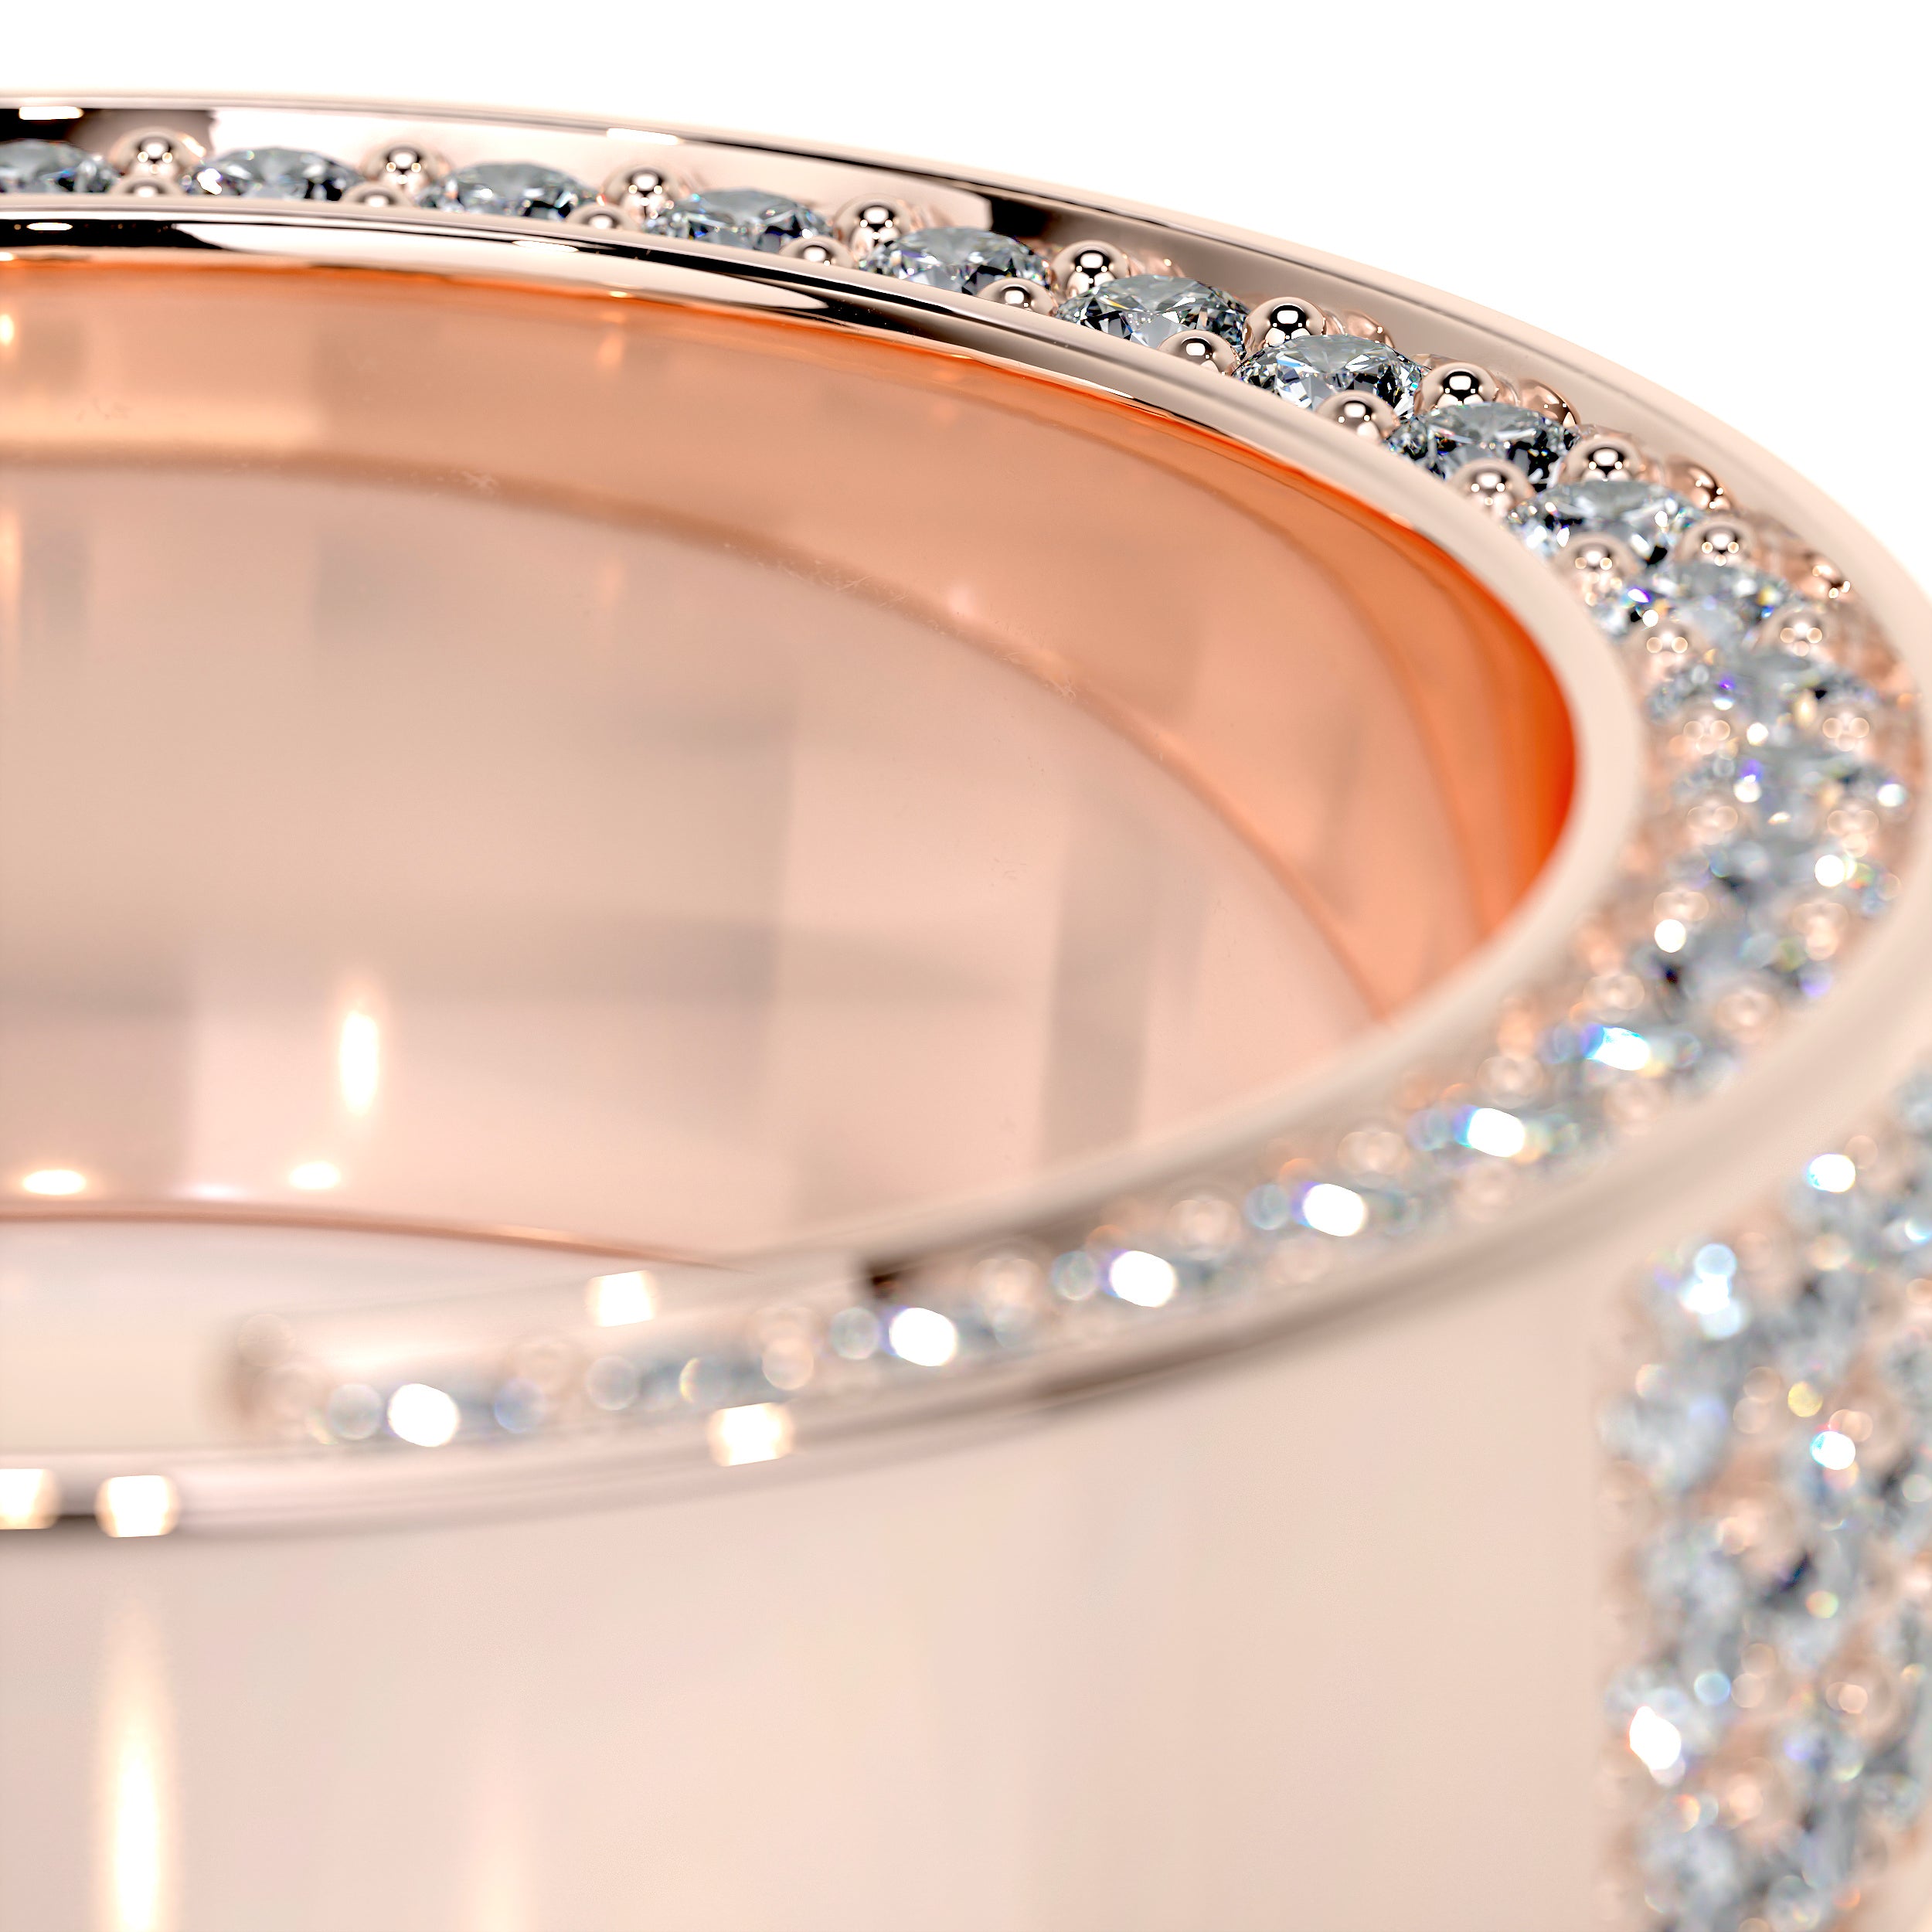 Vera Diamond Wedding Ring   (1.3 Carat) -14K Rose Gold